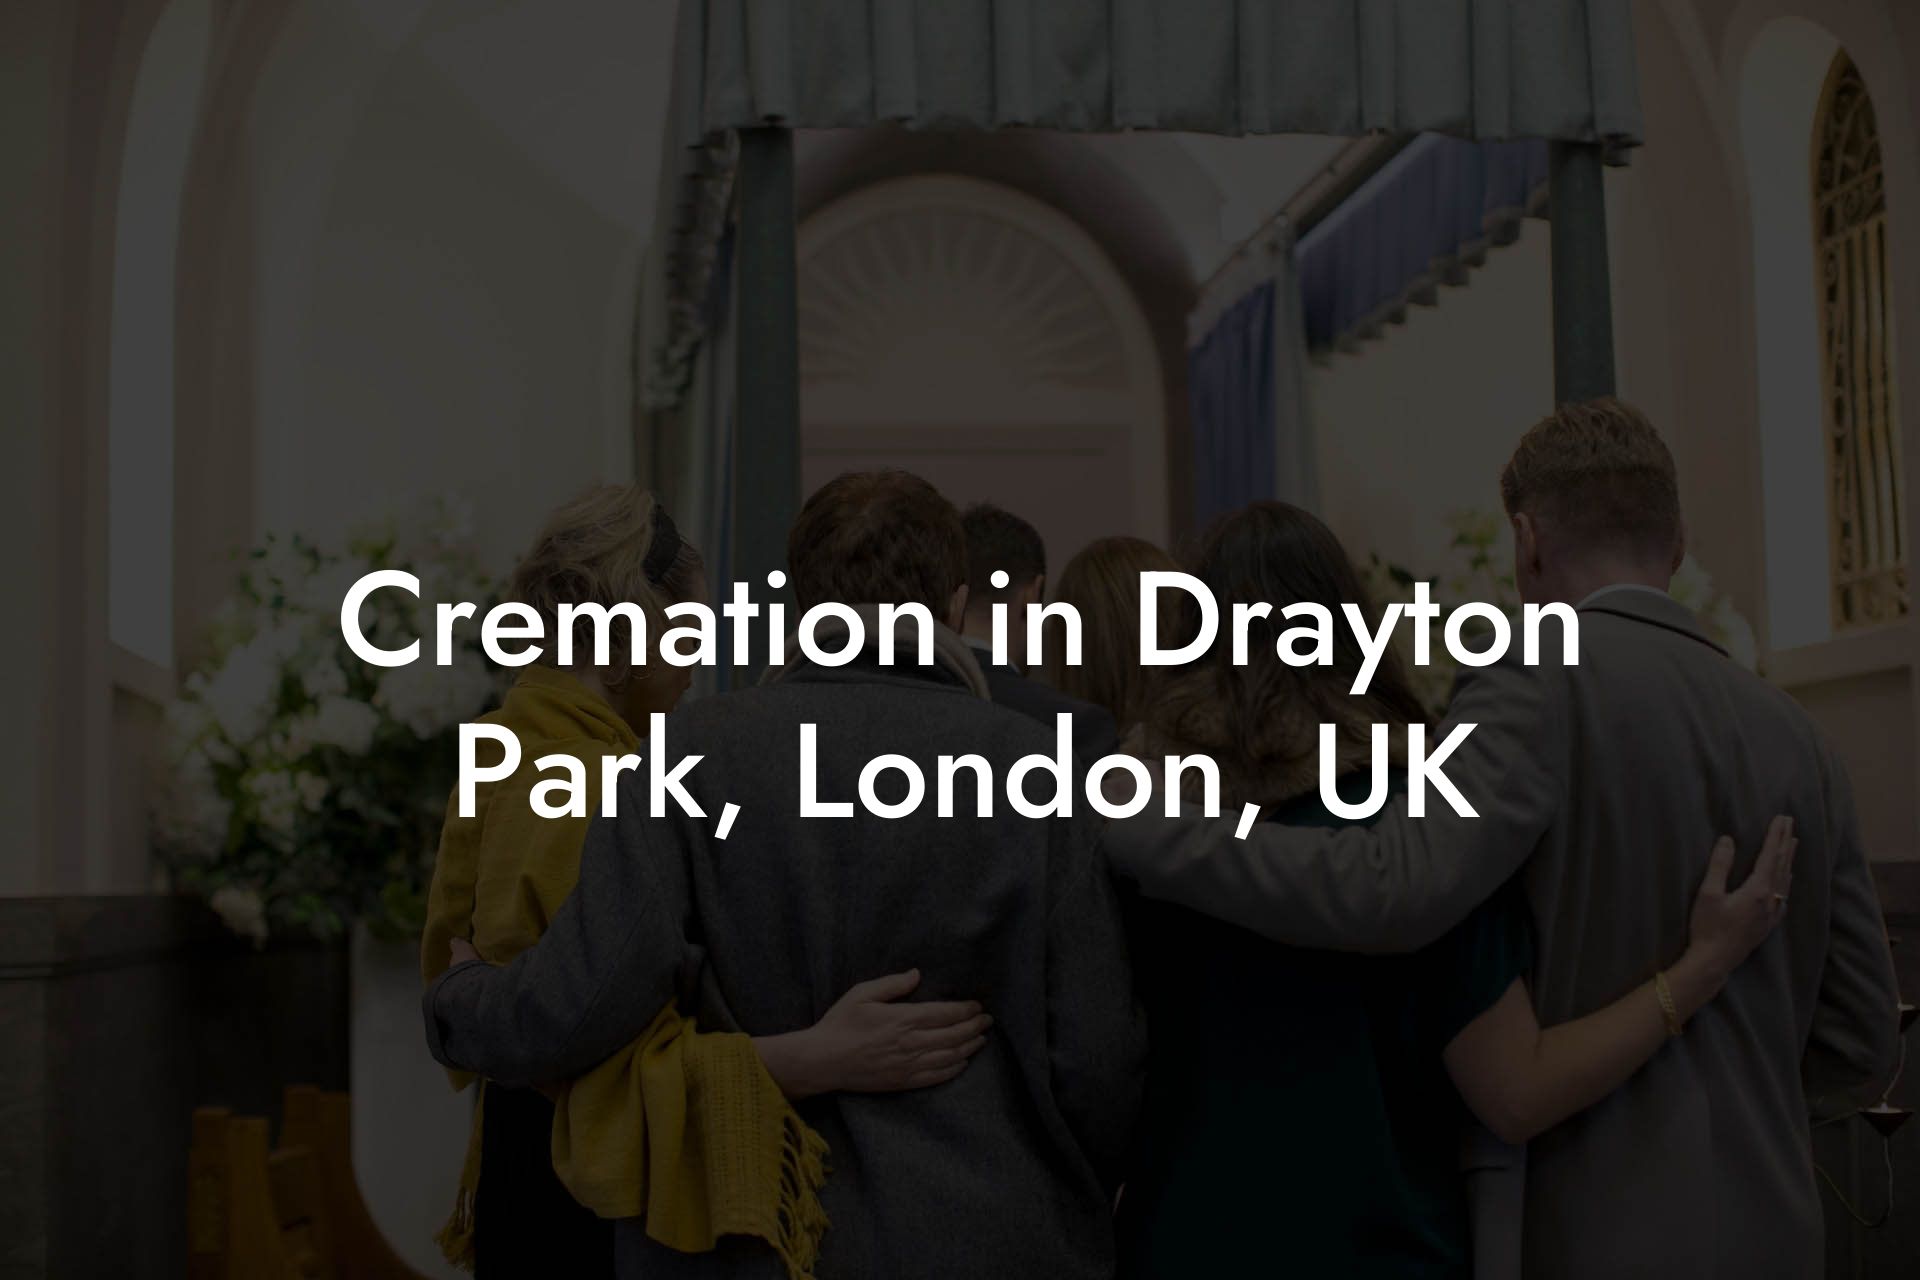 Cremation in Drayton Park, London, UK